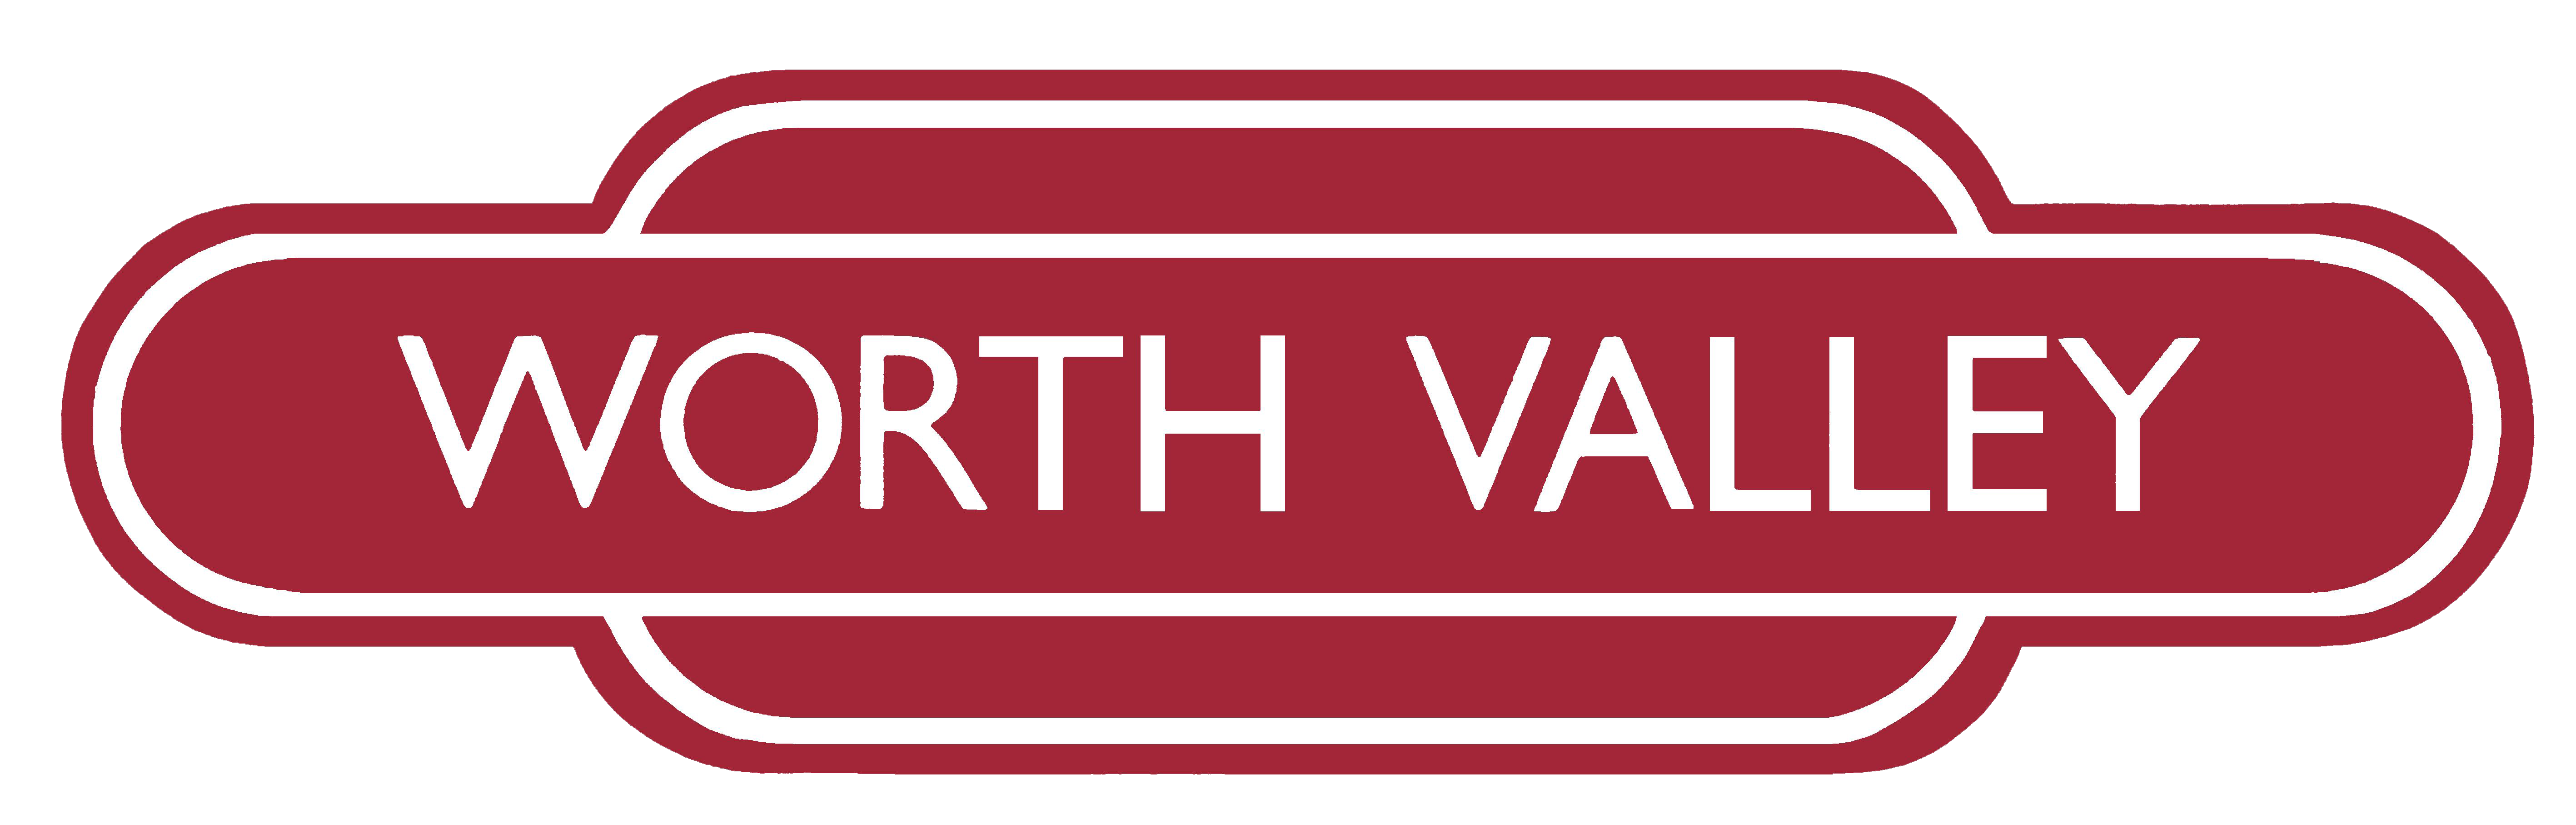 Keighley & Worth Valley Railway